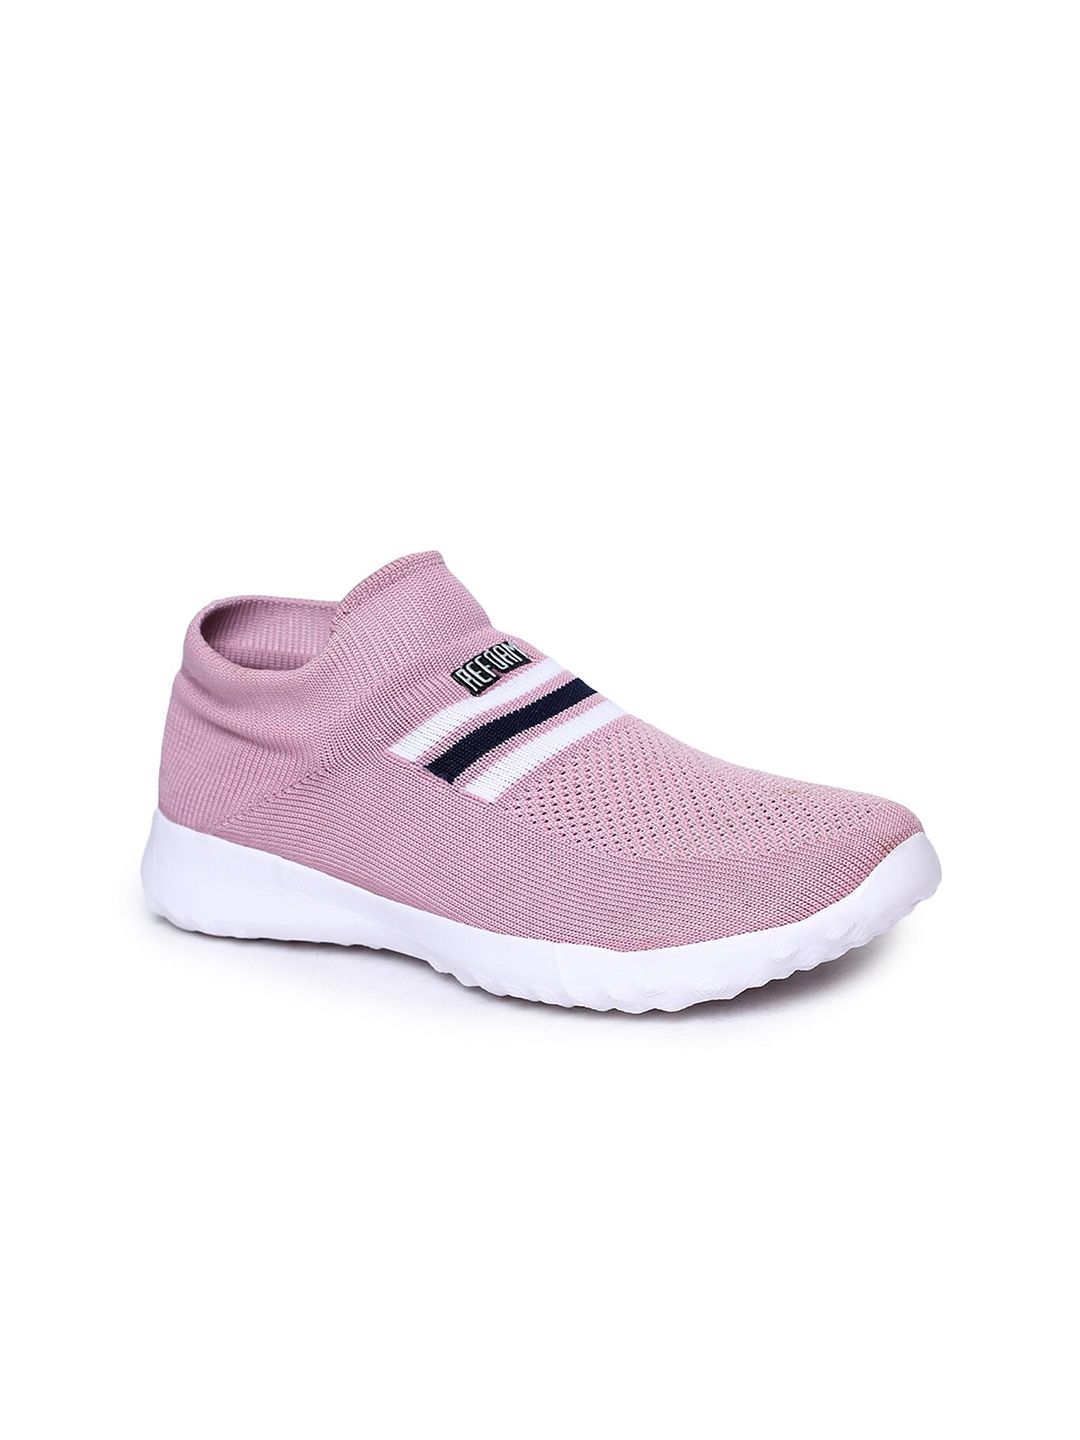 REFOAM Women Pink Mesh Running Shoes Price in India